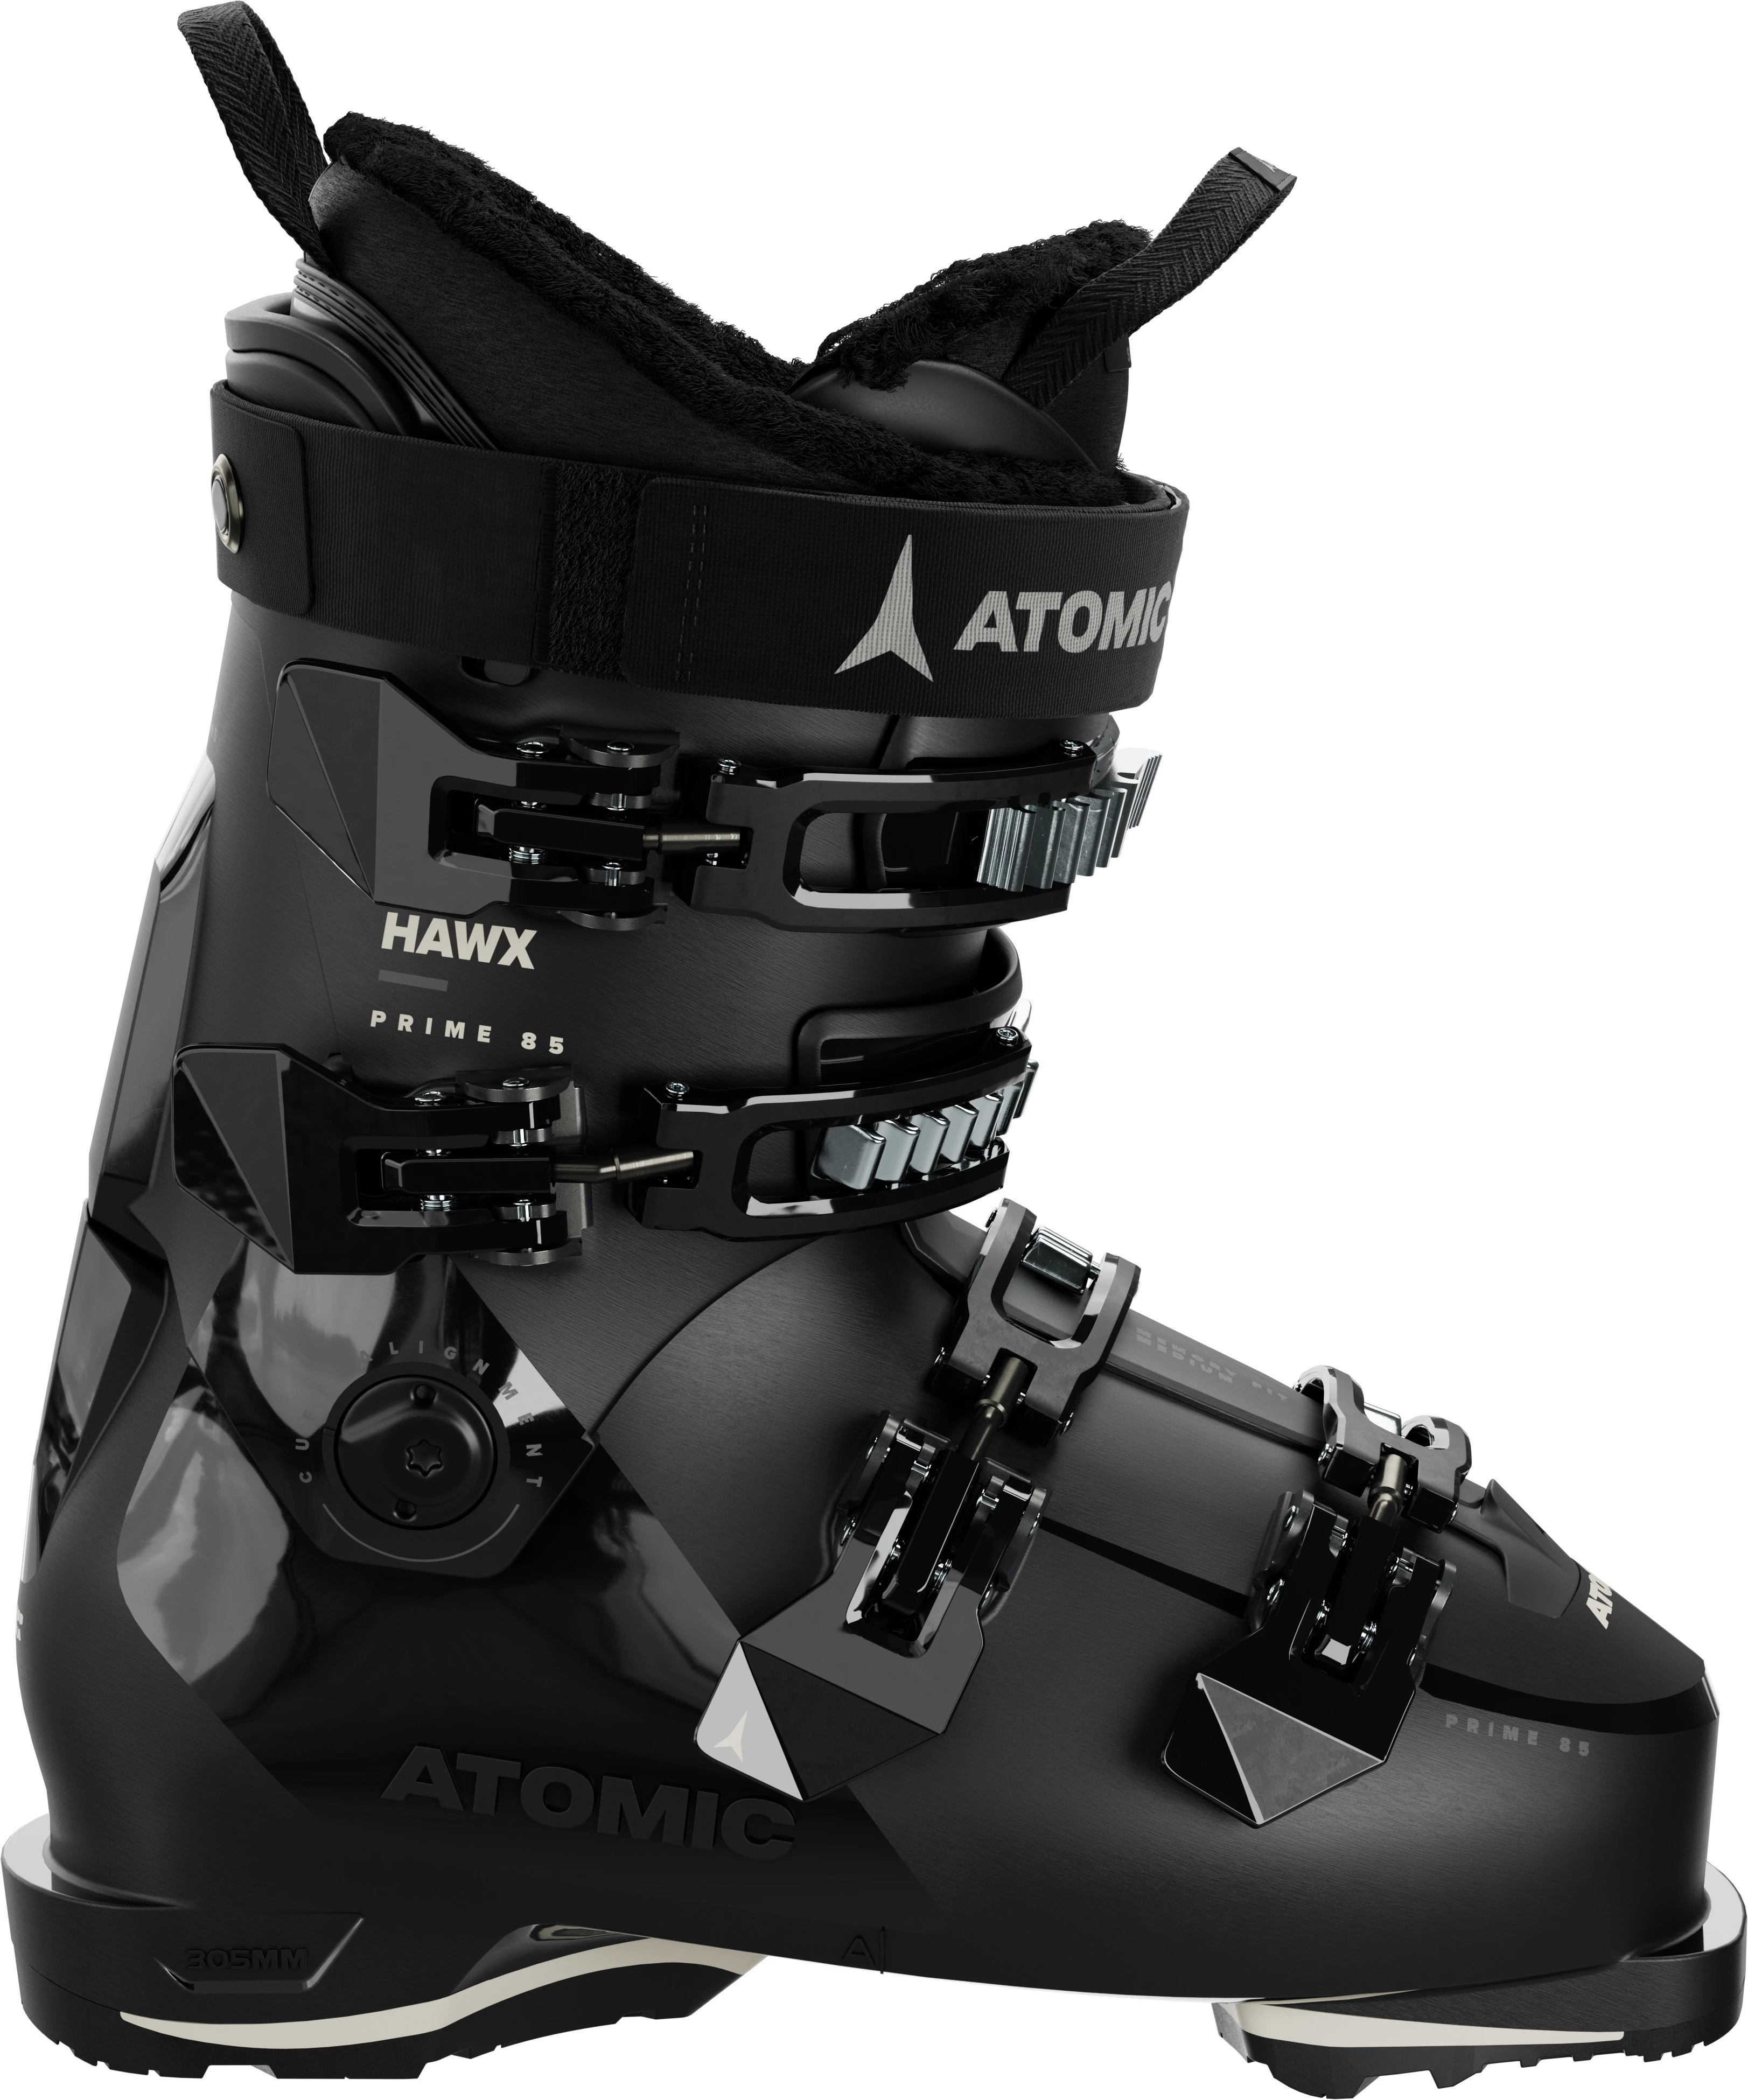 Ženski Smučarski čevlji Atomic Hawx Prime 85